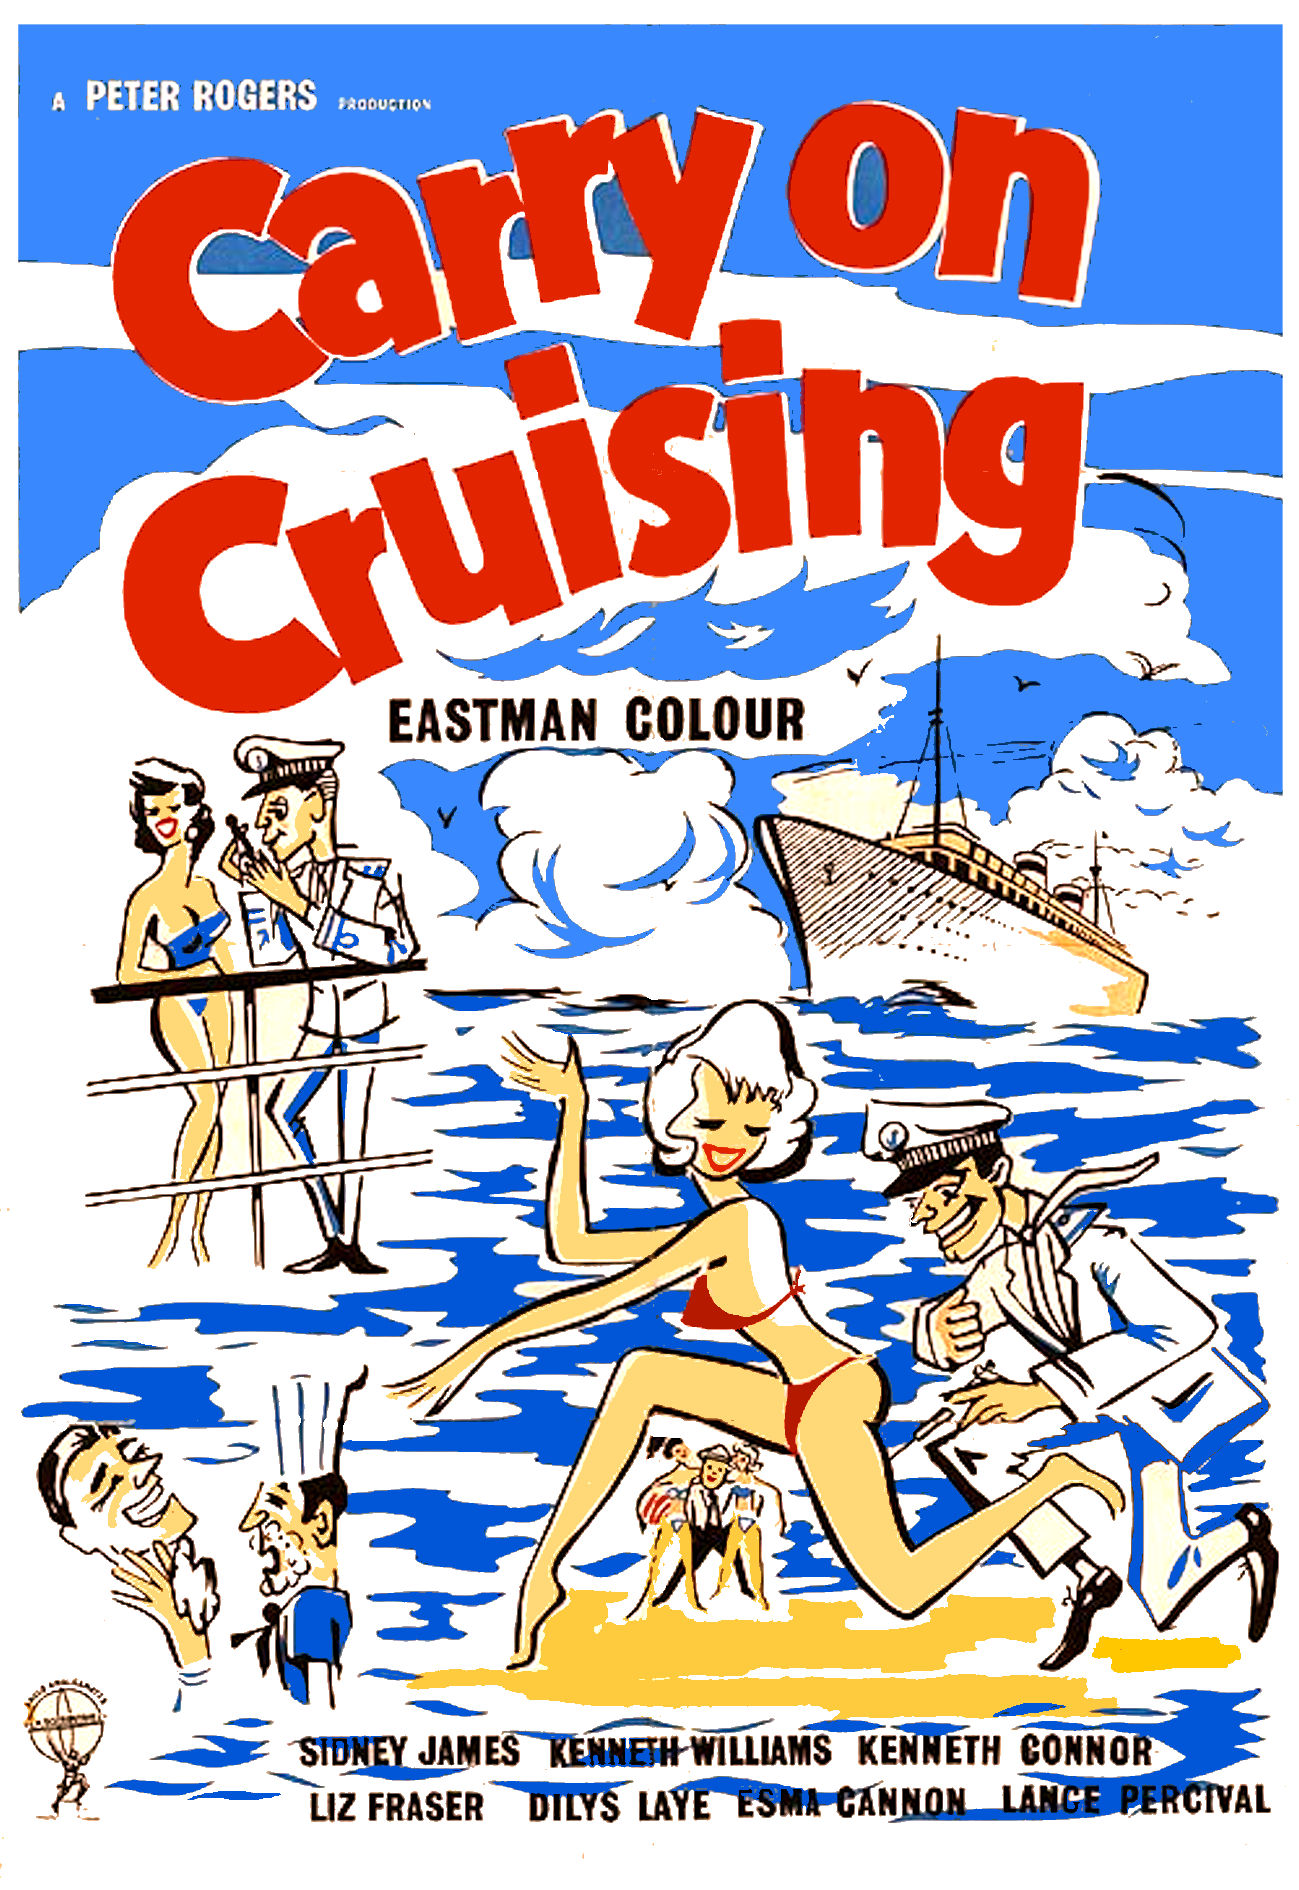 Carry On Cruising (1962) starring Sidney James on DVD on DVD